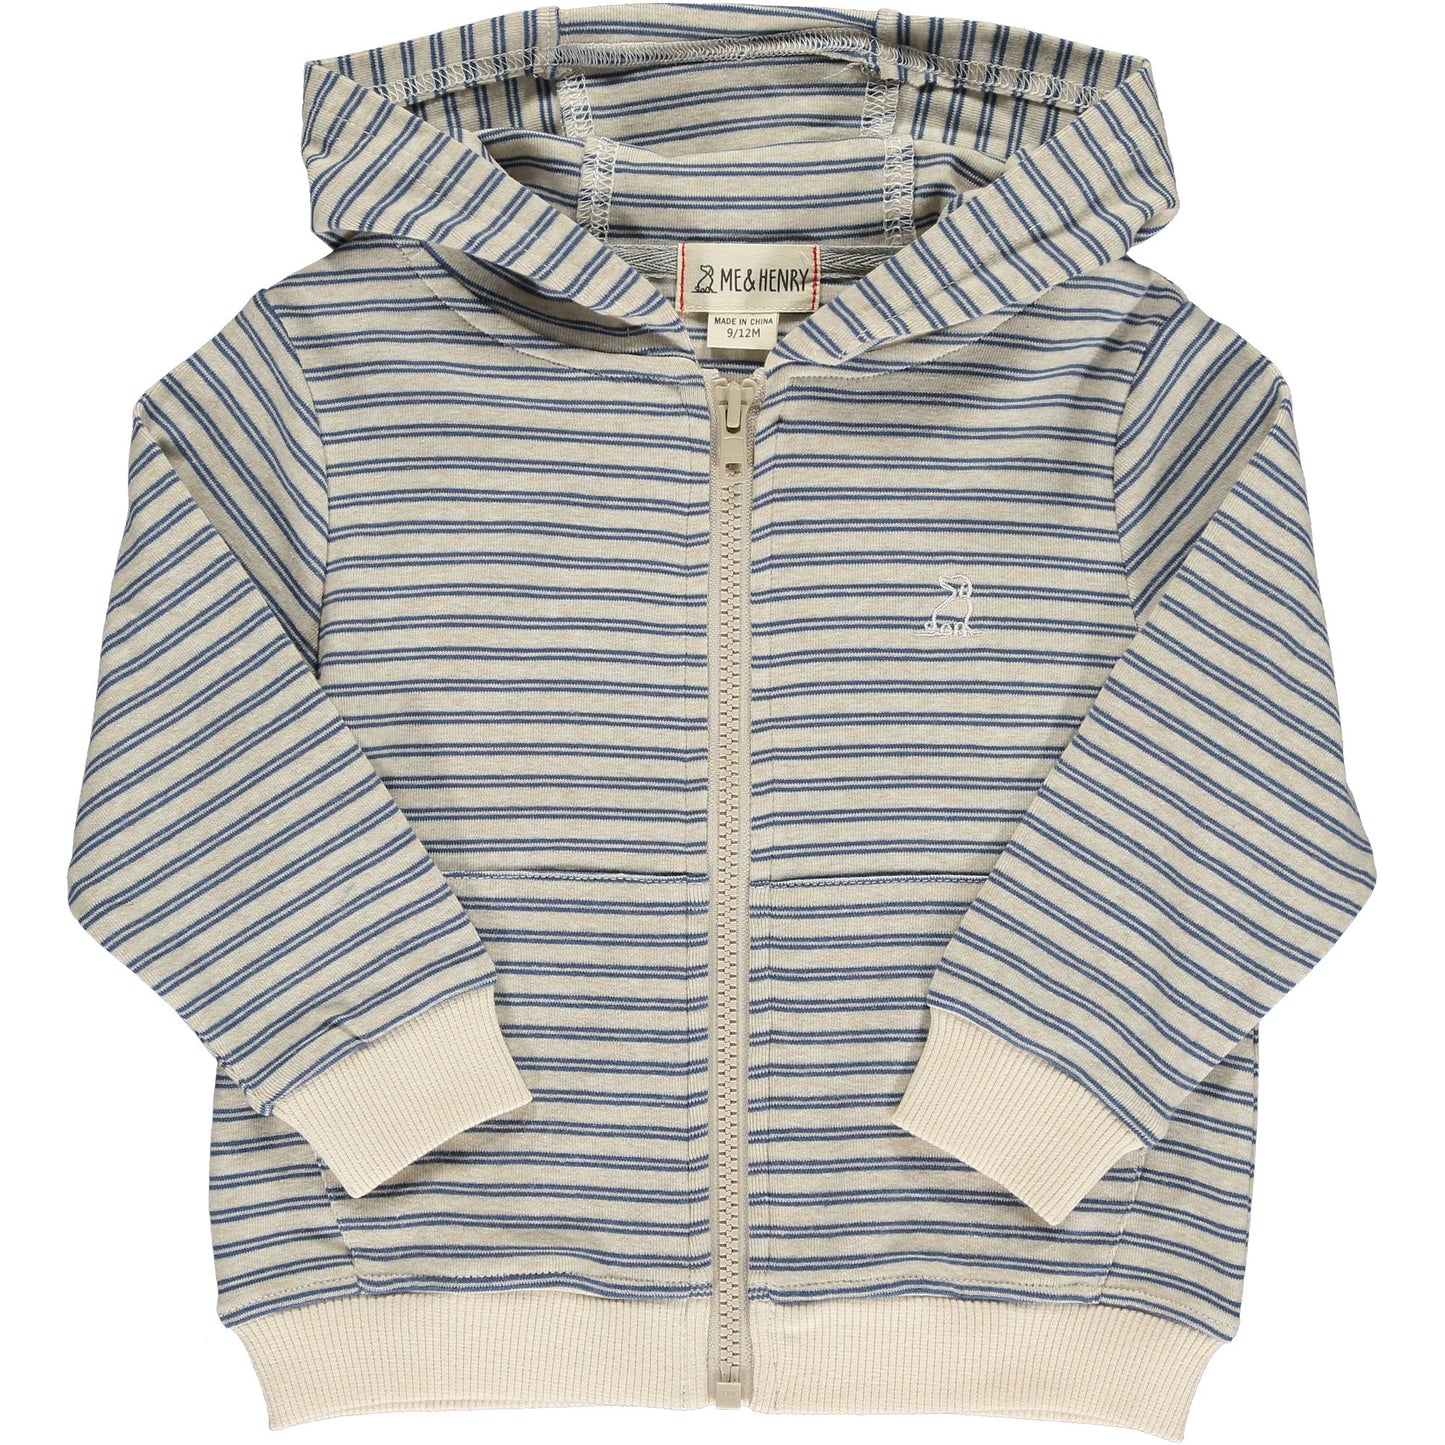 Toddler- Blue/Beige Stripe JAMES Zipped Hooded Top